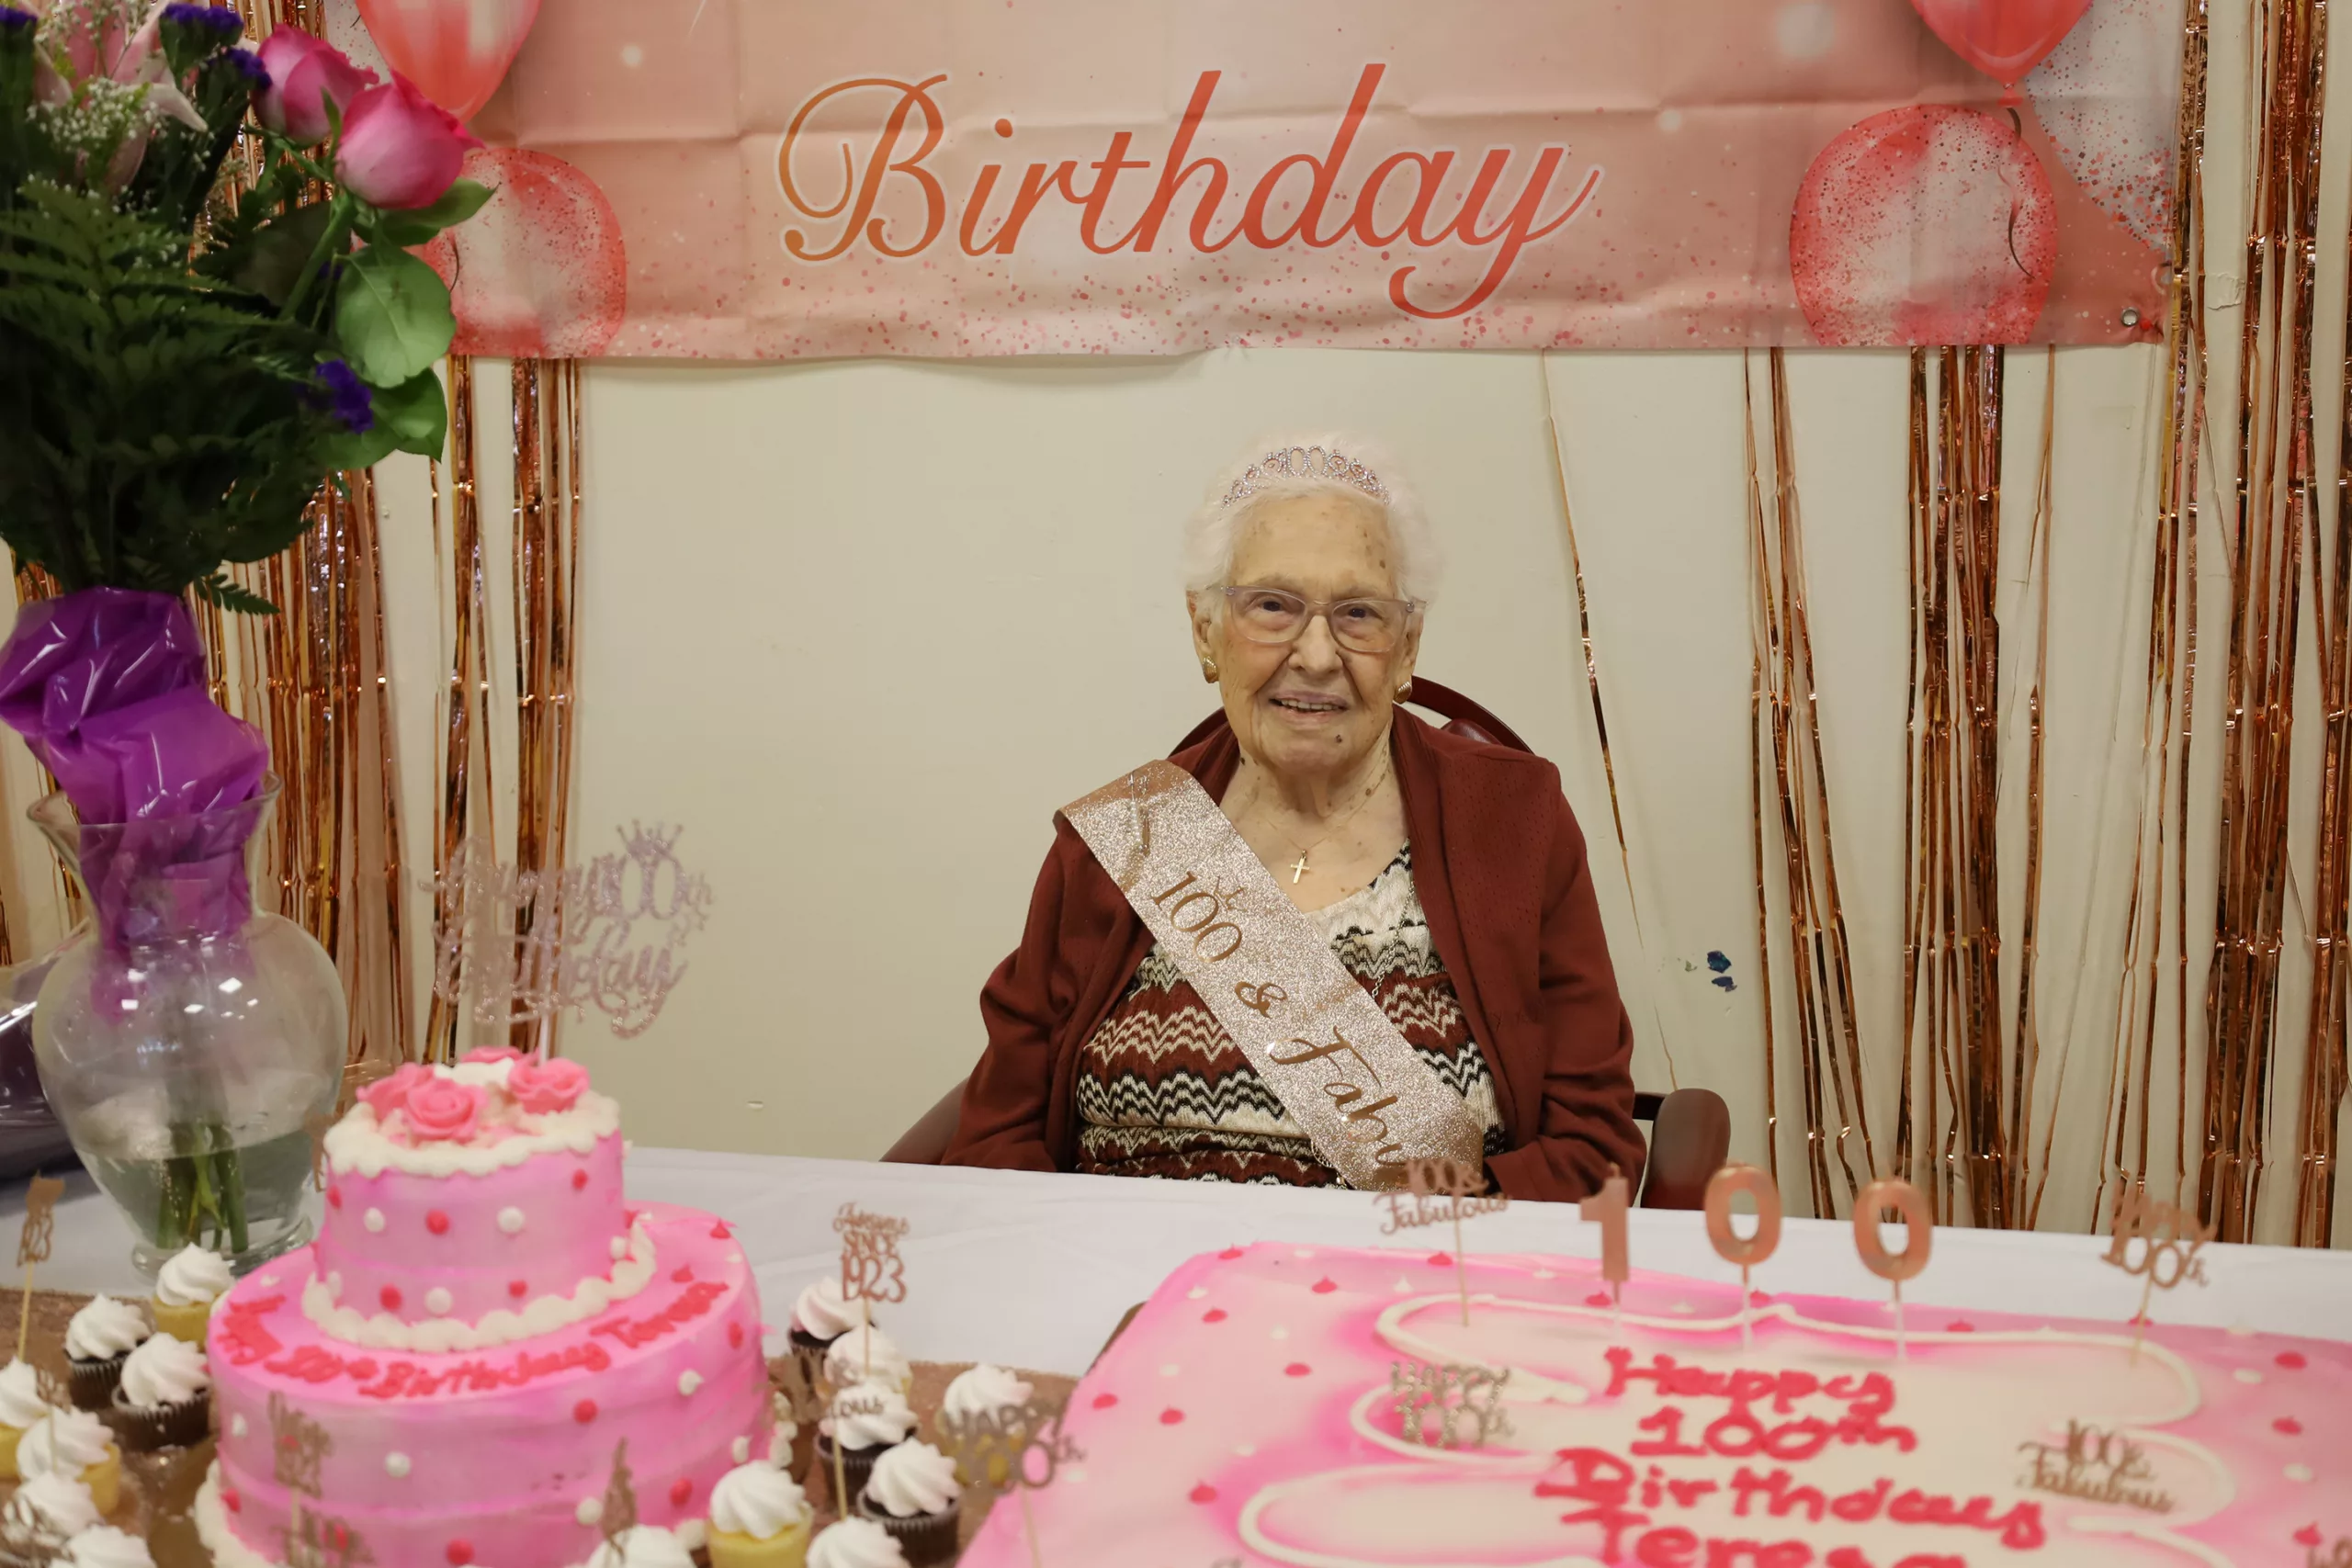 Sunnyside Post: Newest Centenarian in Sunnyside Celebrates With Family, Friends at Neighborhood Community Center